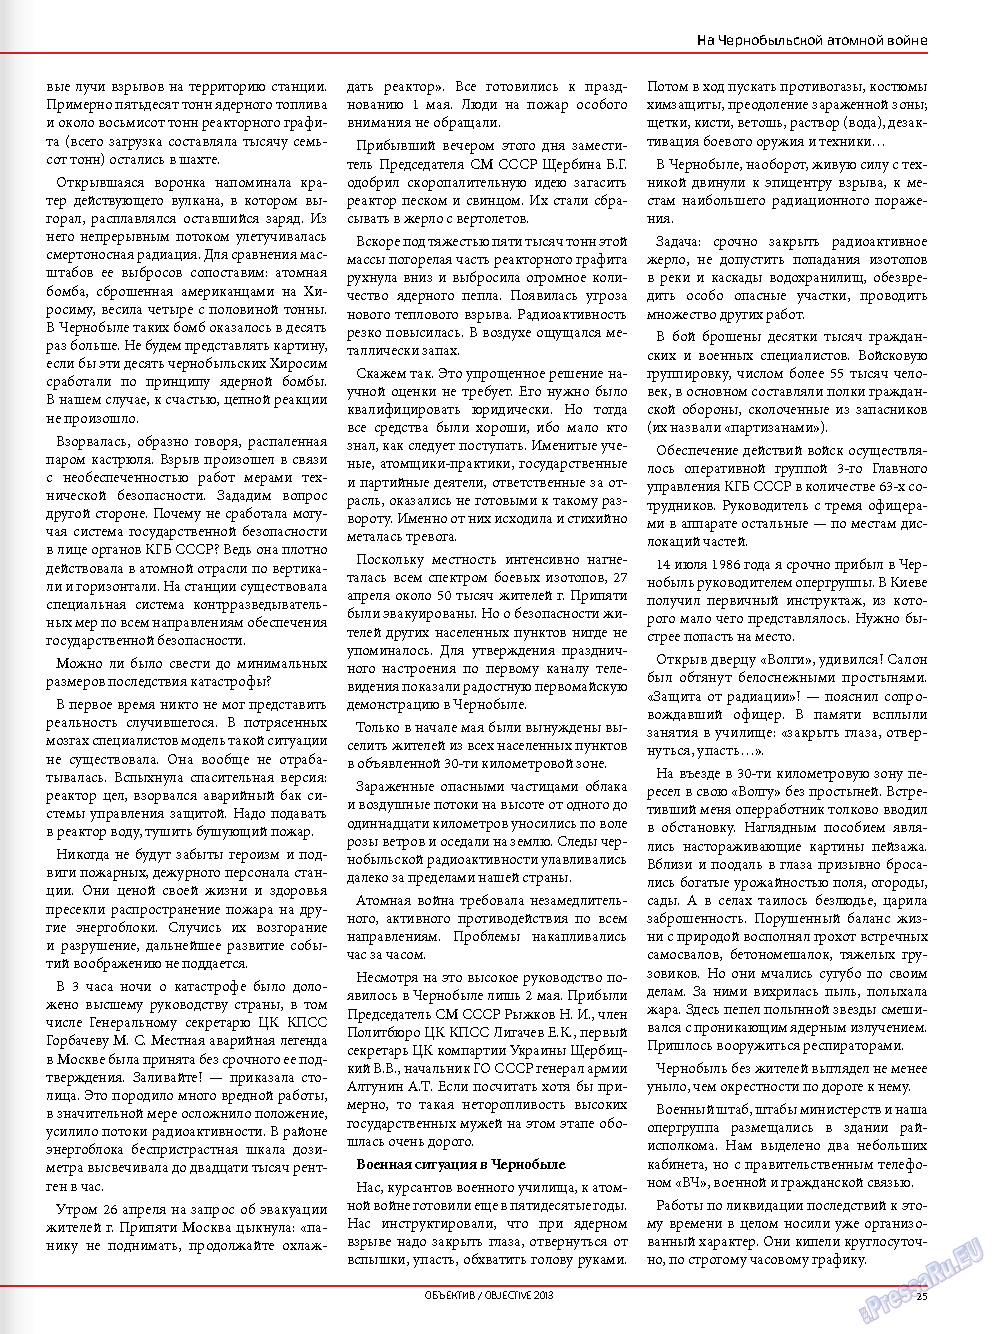 Объектив EU, журнал. 2013 №1 стр.27